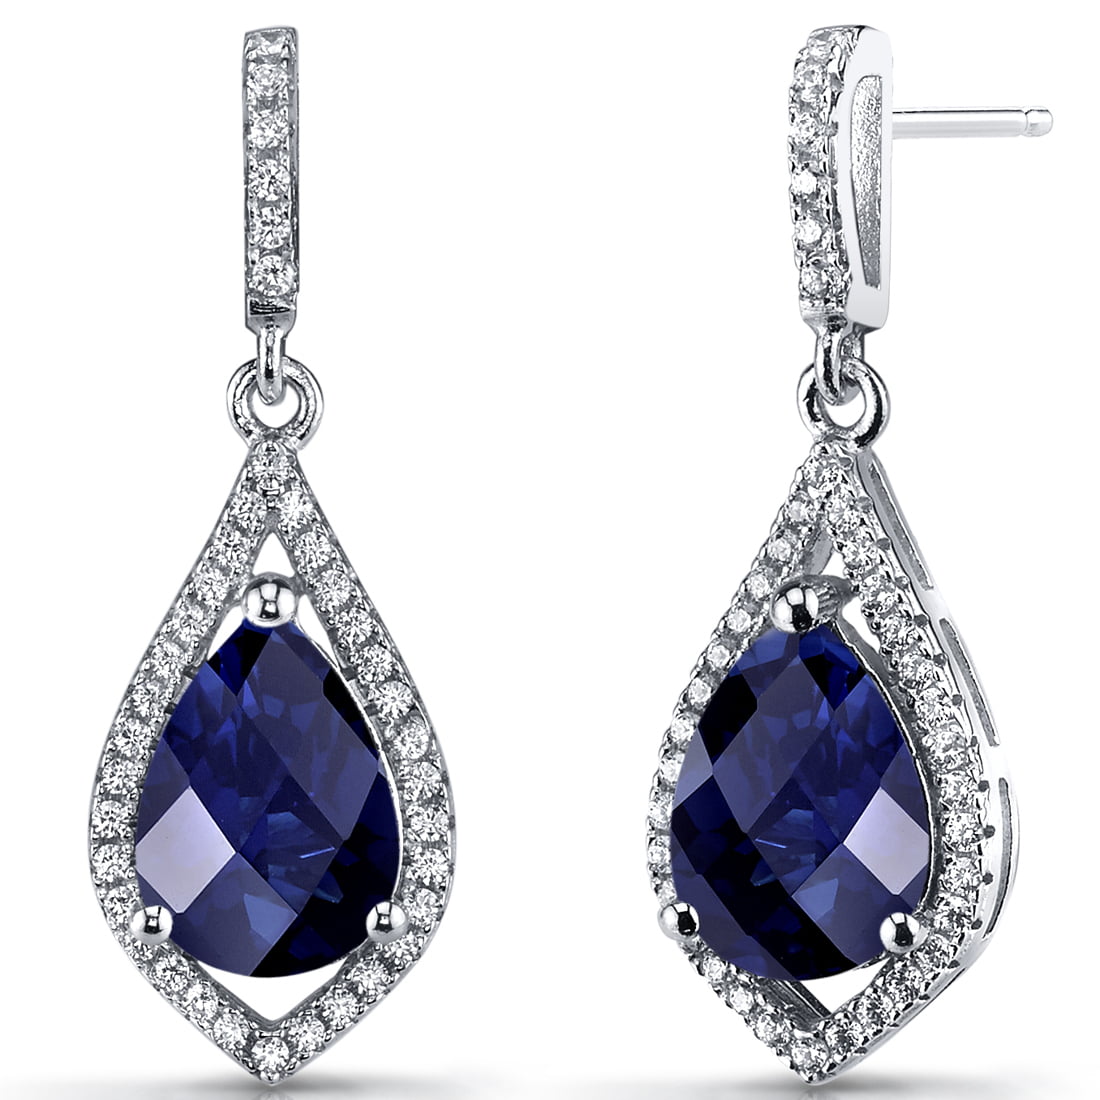 Earrings Pierced Sapphire Lab Created 925 Sterling Silver Blue Gemstones Dangle